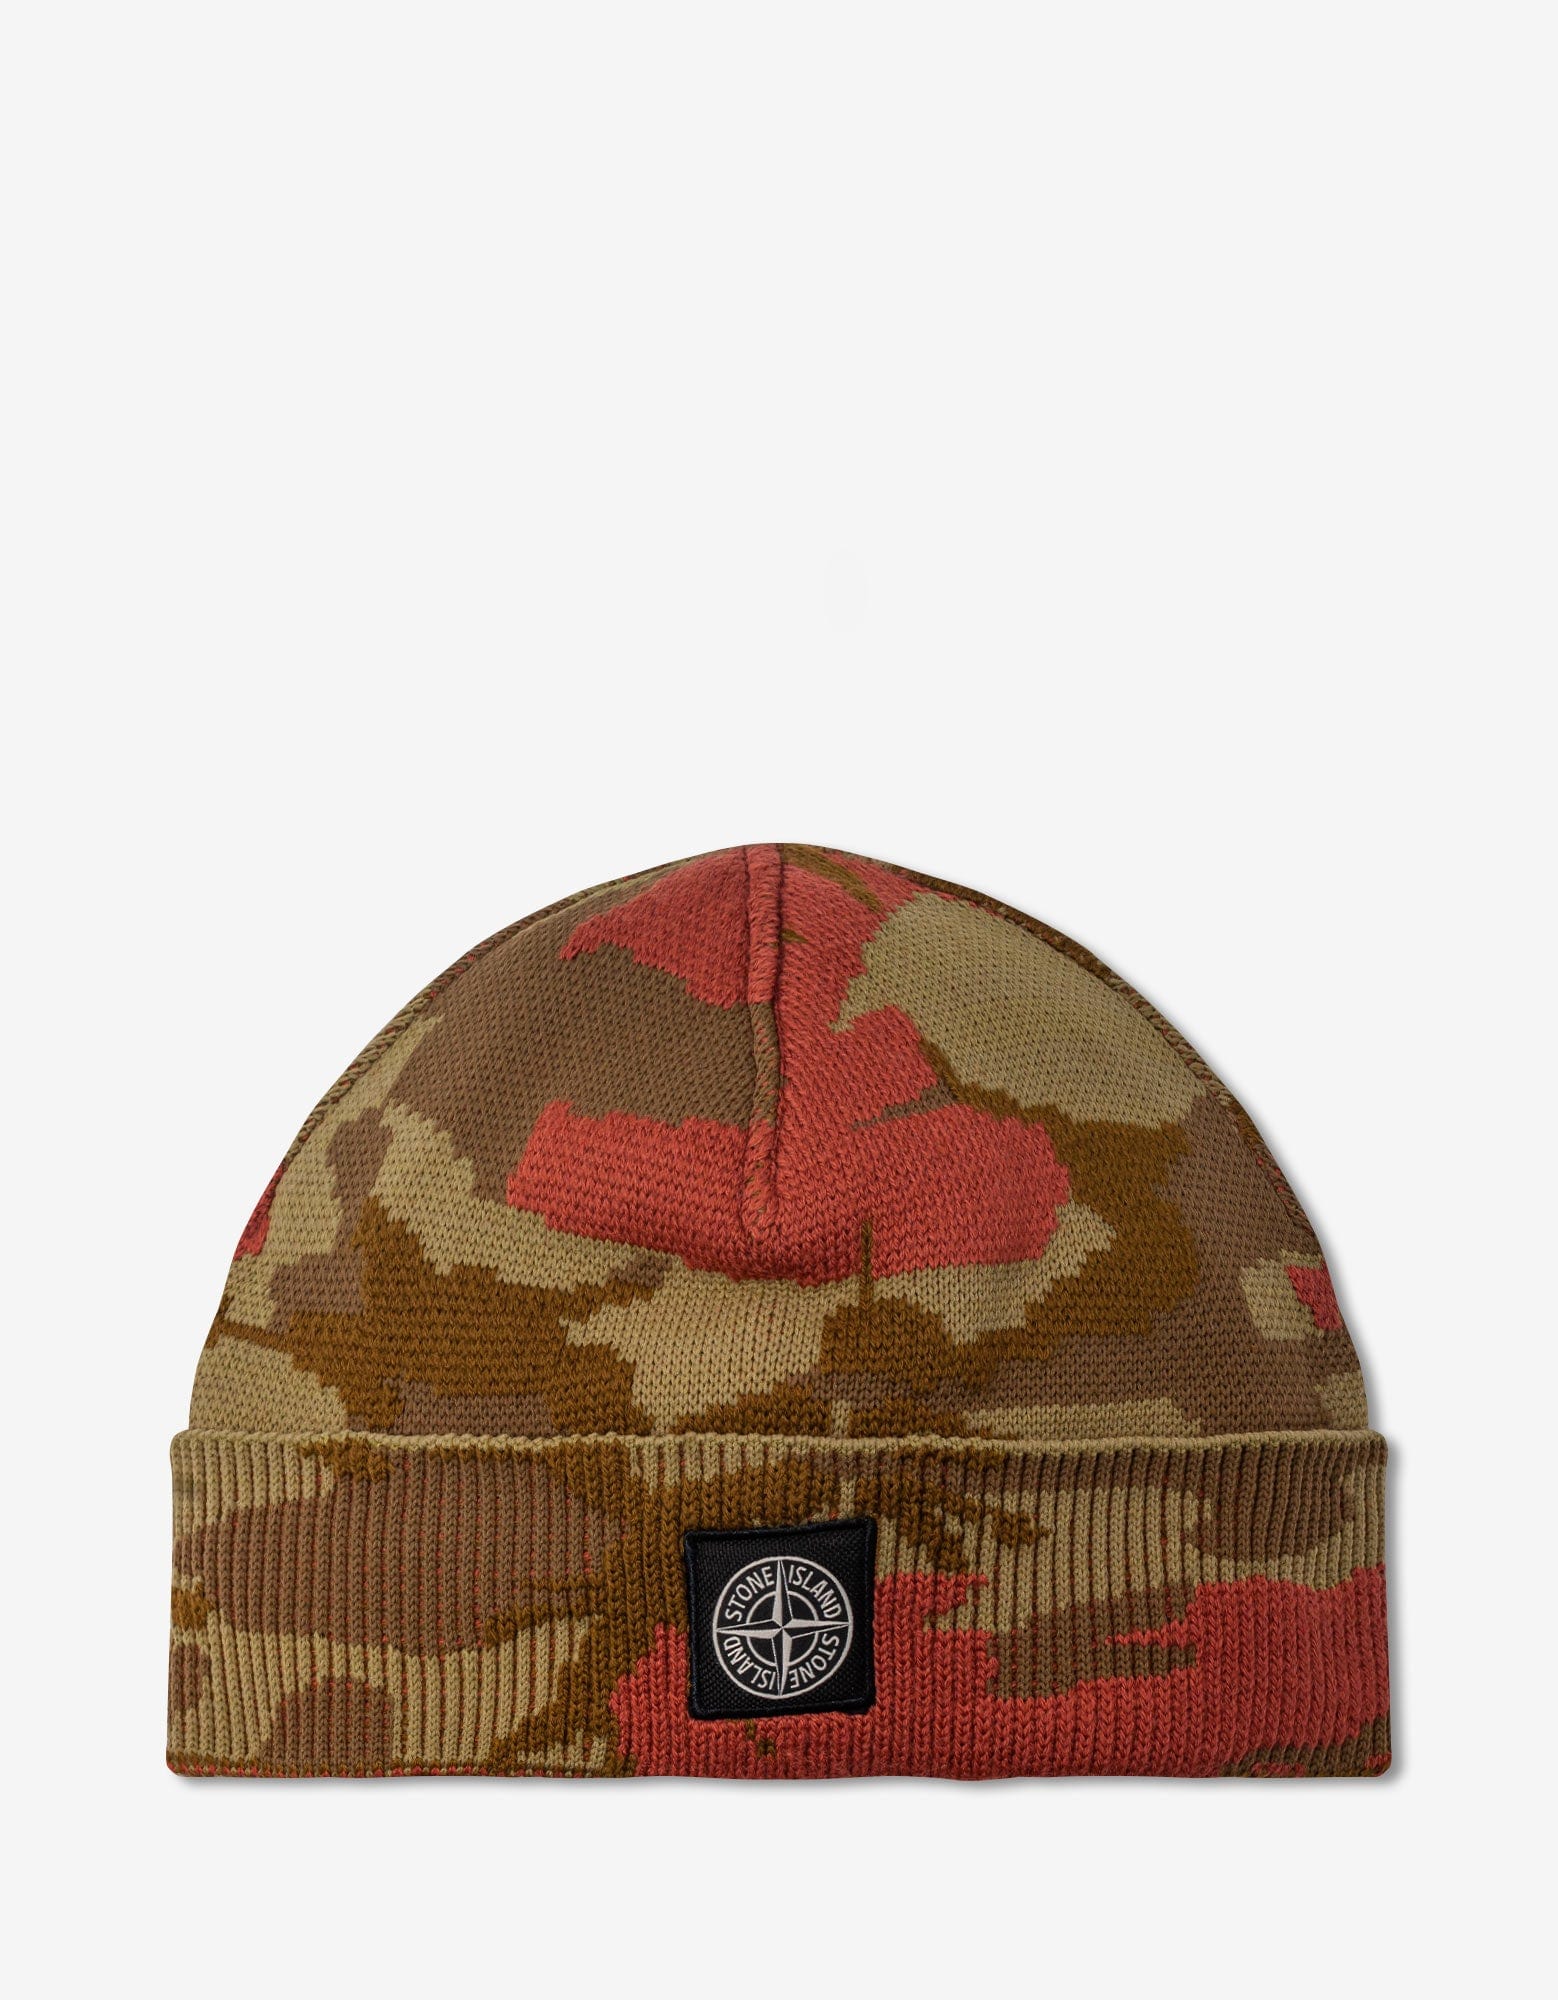 Hats – tagged 